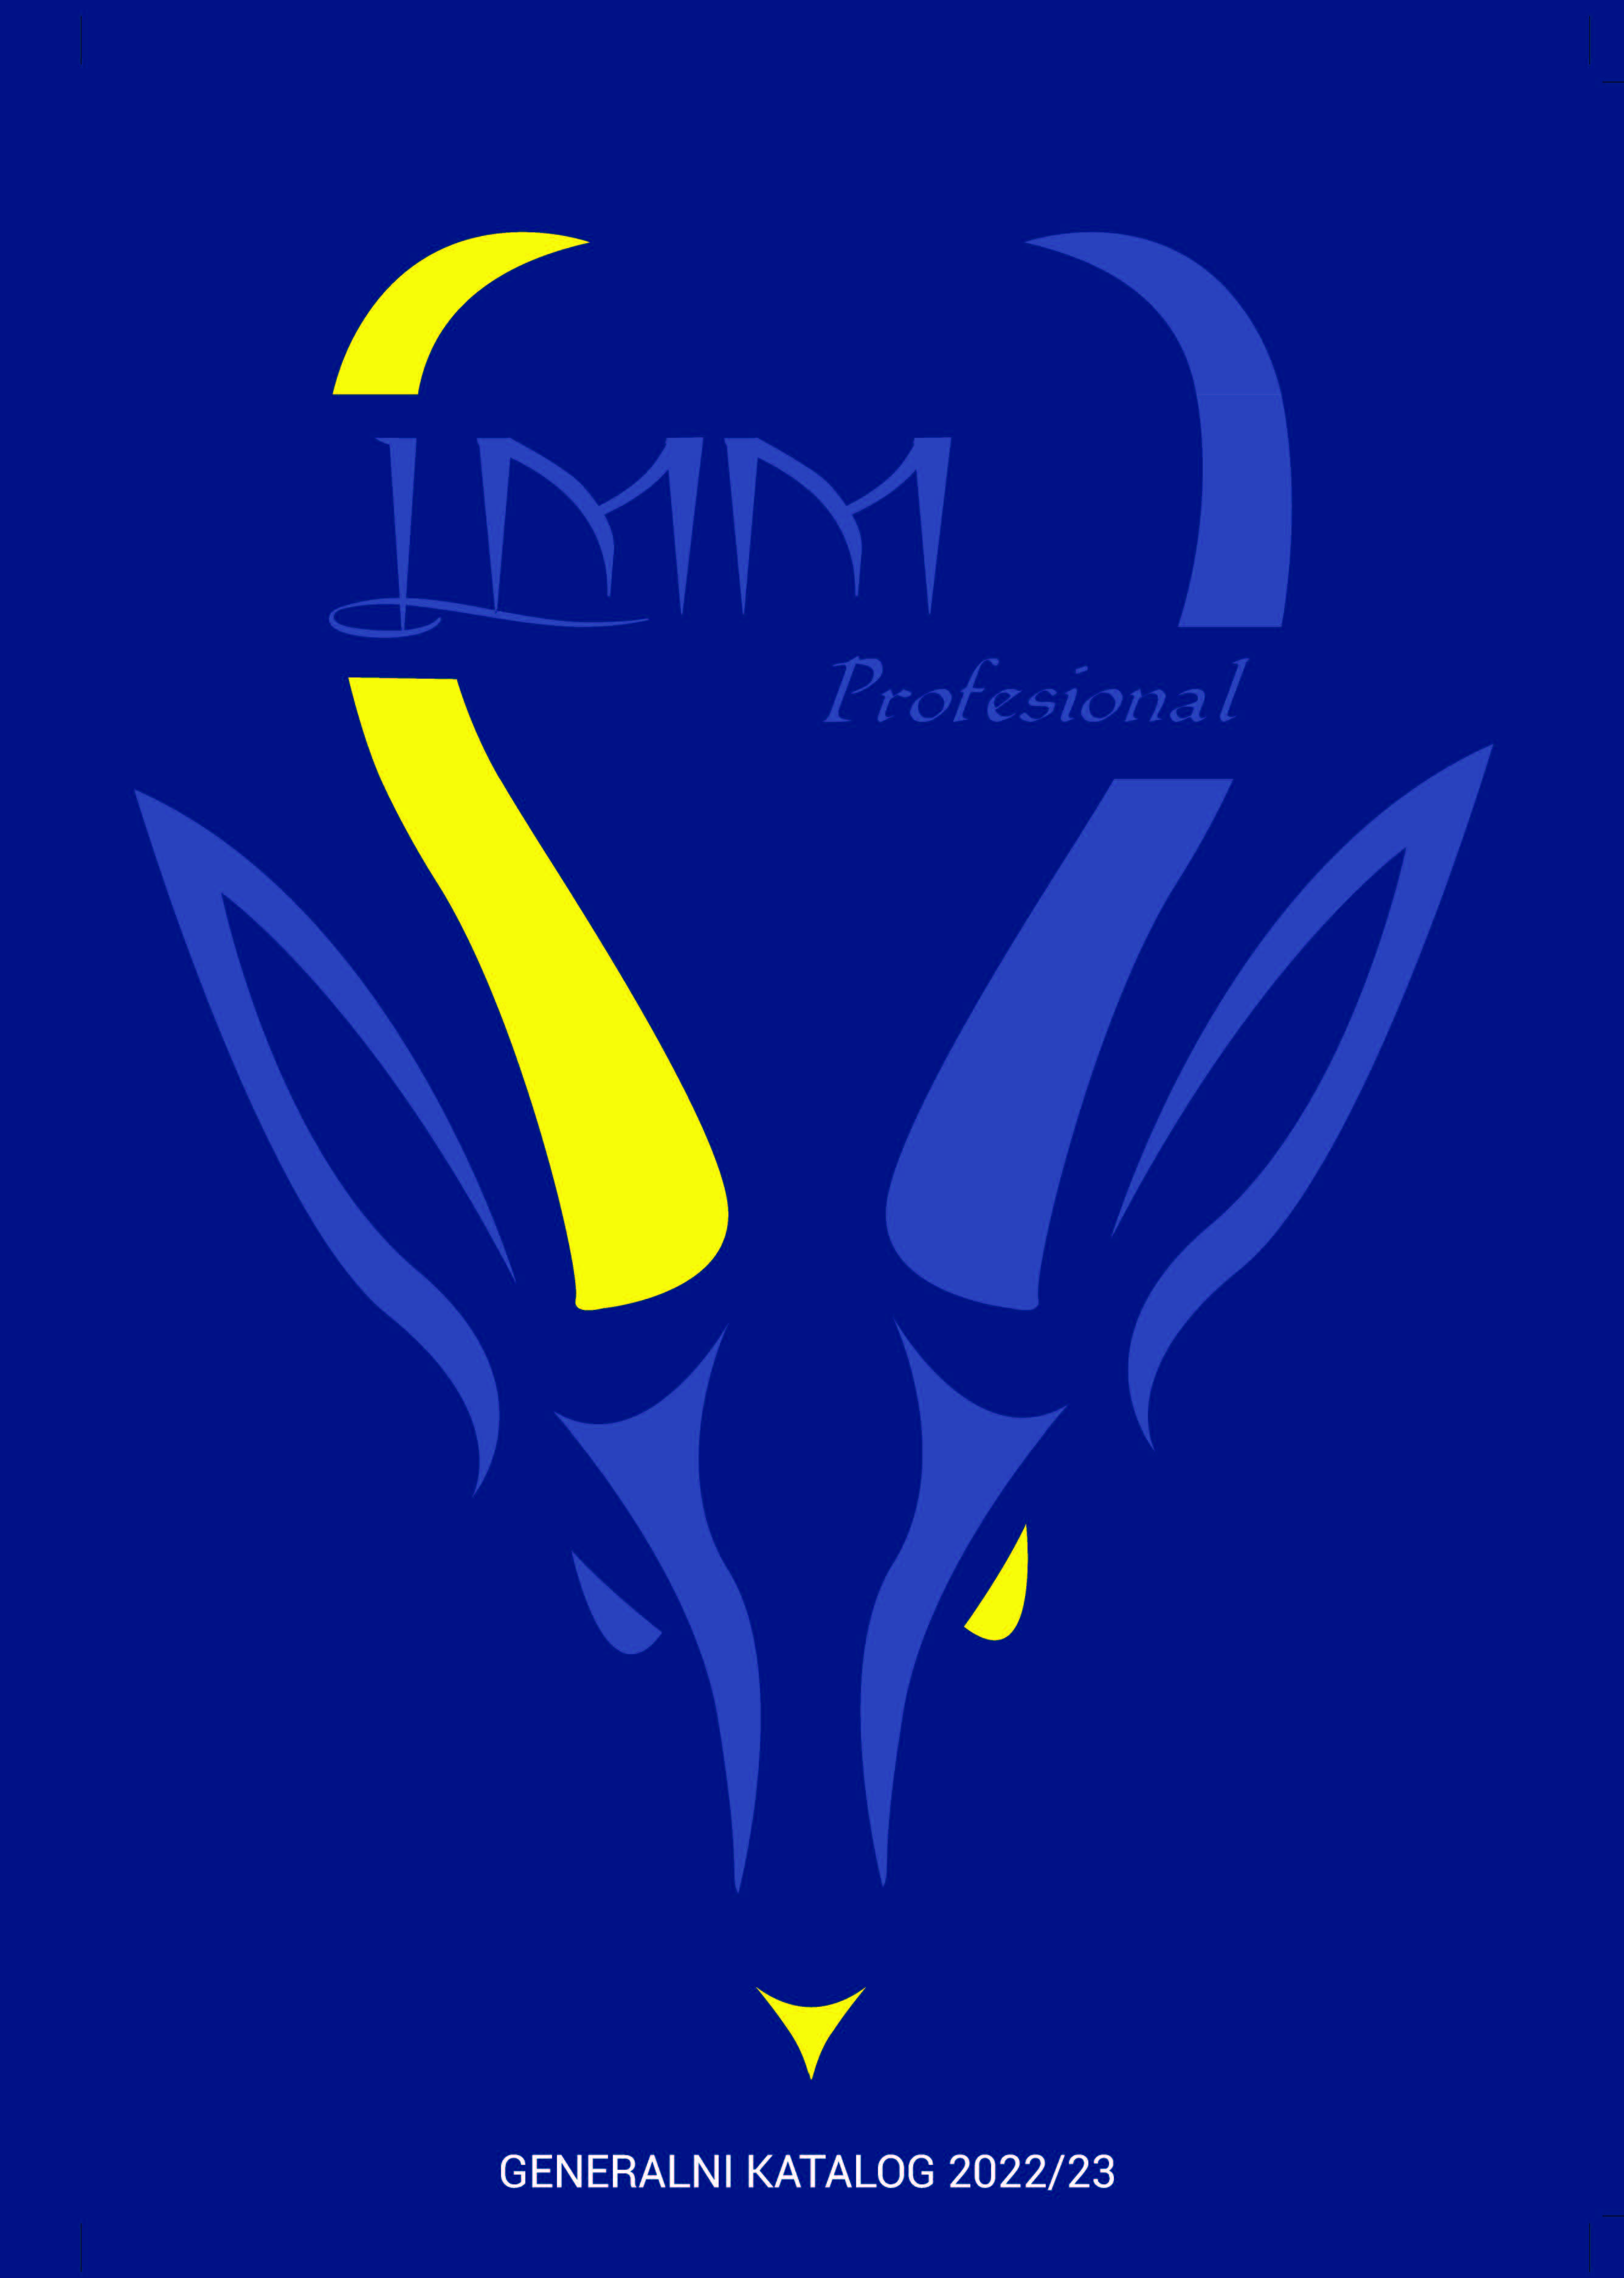 Katalog LMM Profesional katalog